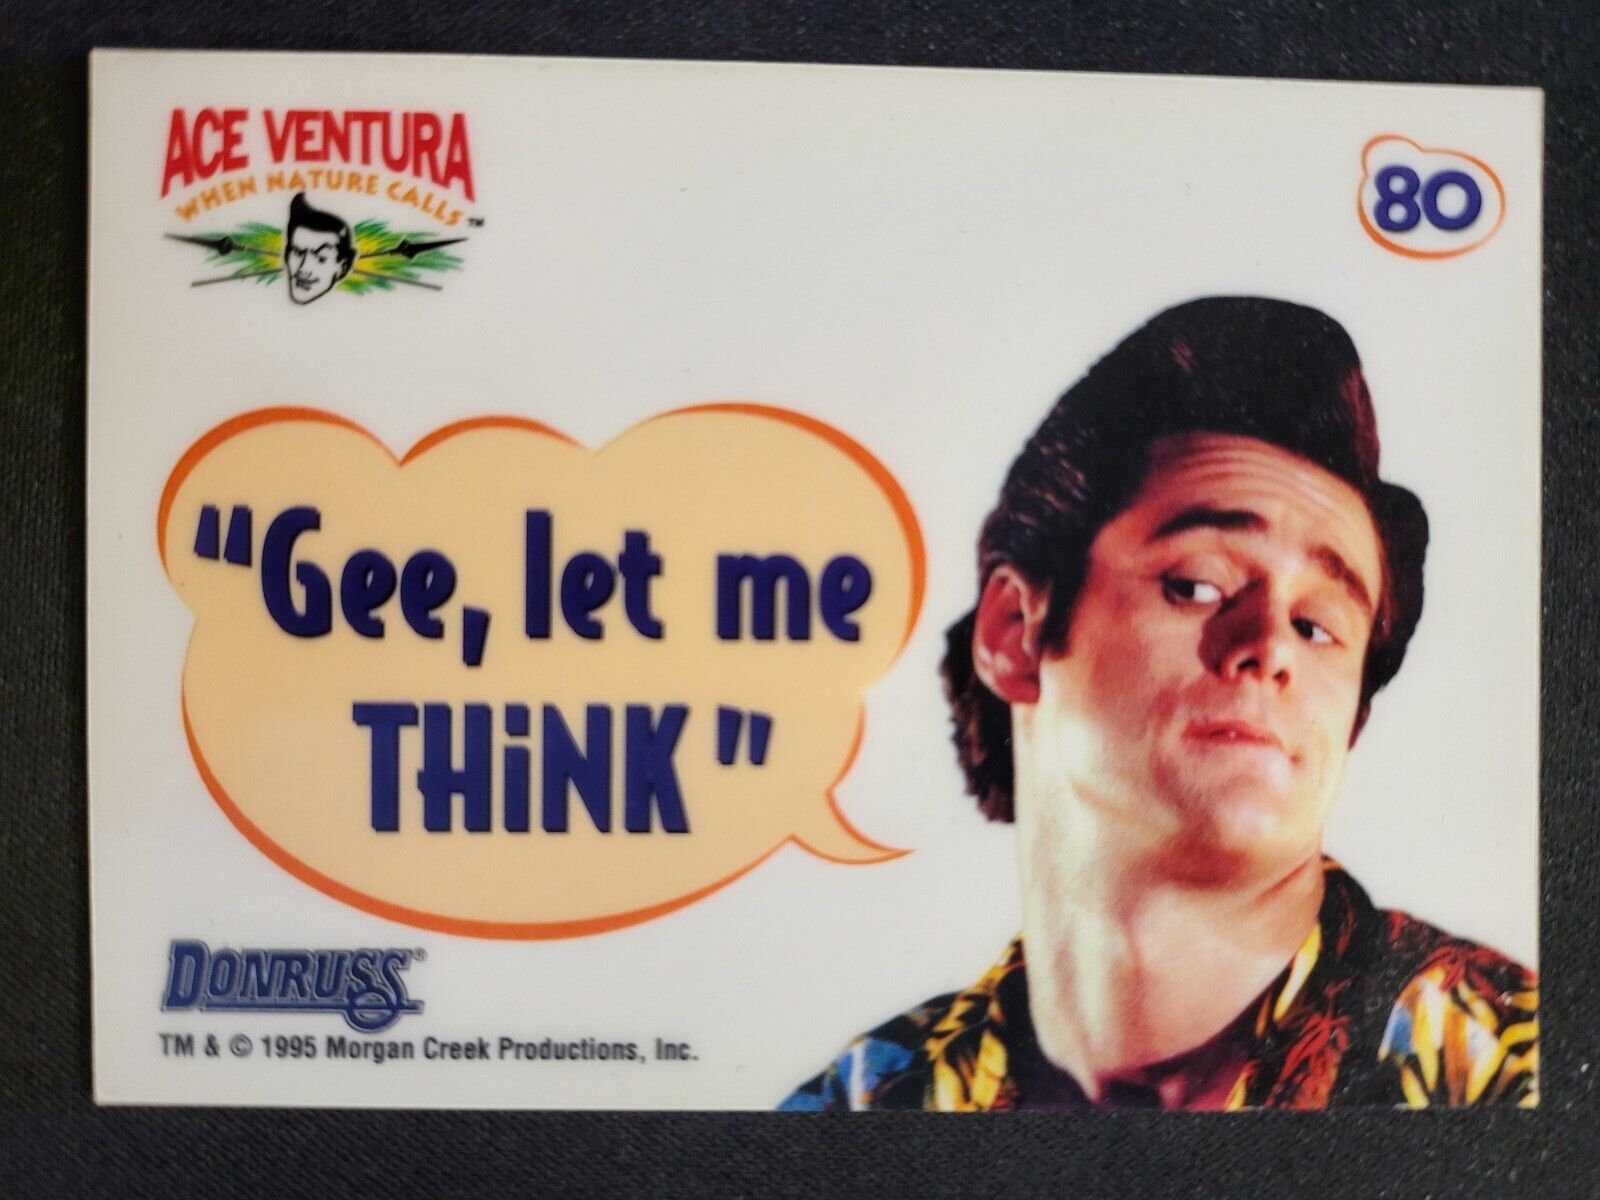 1995 Donruss Ace Ventura Nature Calls STATIC CLING STICKER Jim Carey card #80 